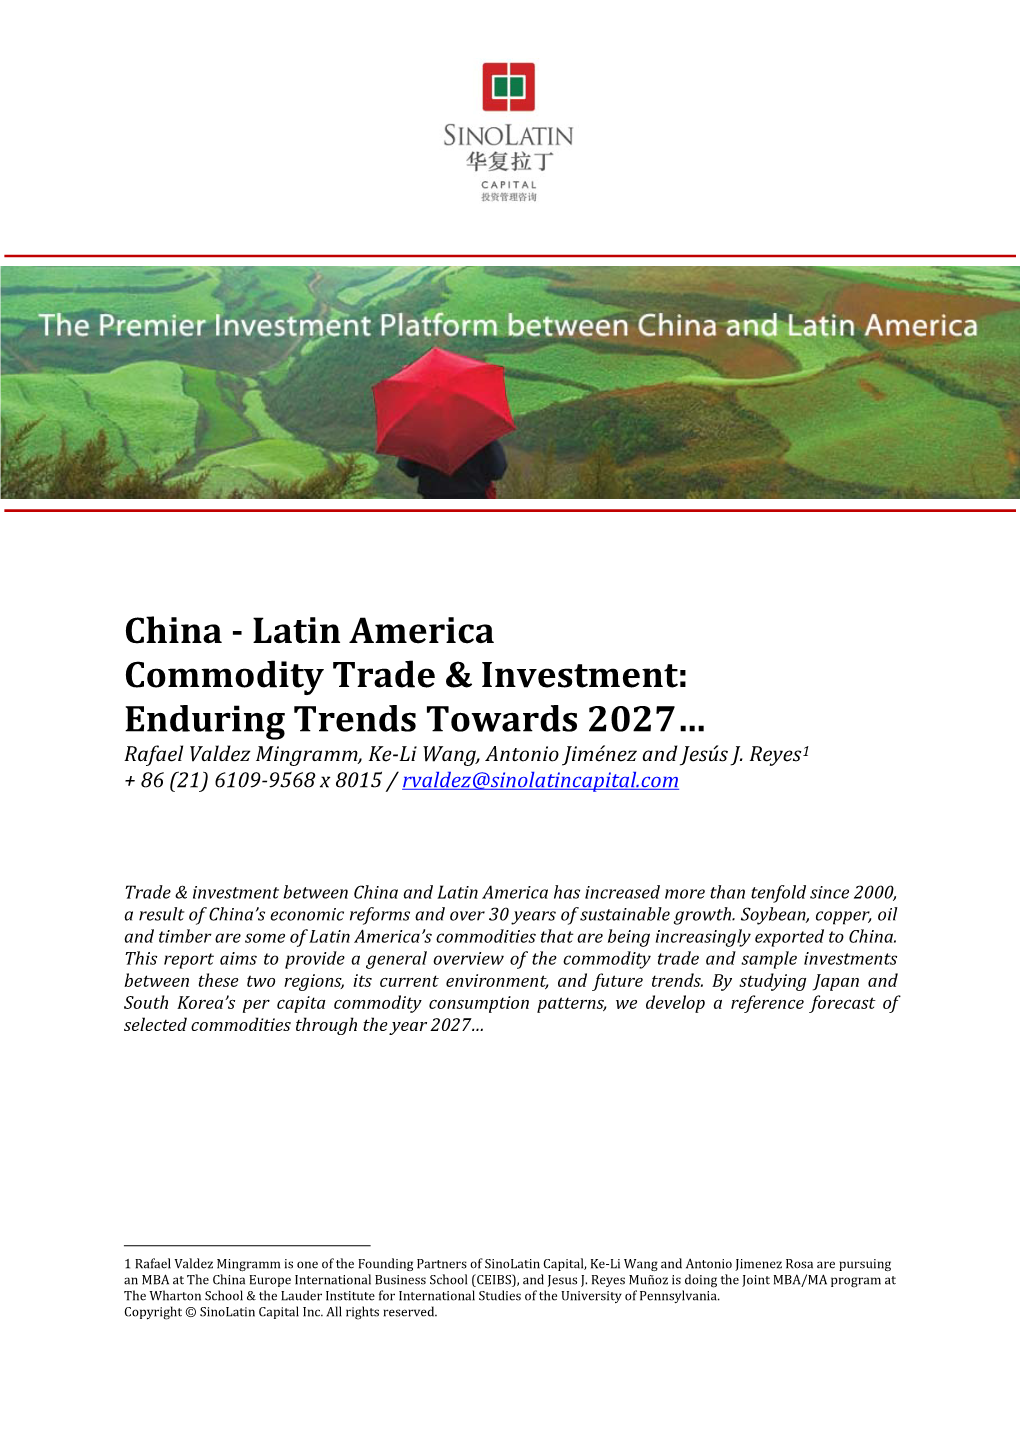 China - Latin America Commodity Trade & Investment: Enduring Trends Towards 2027… Rafael Valdez Mingramm, Ke-Li Wang, Antonio Jiménez and Jesús J